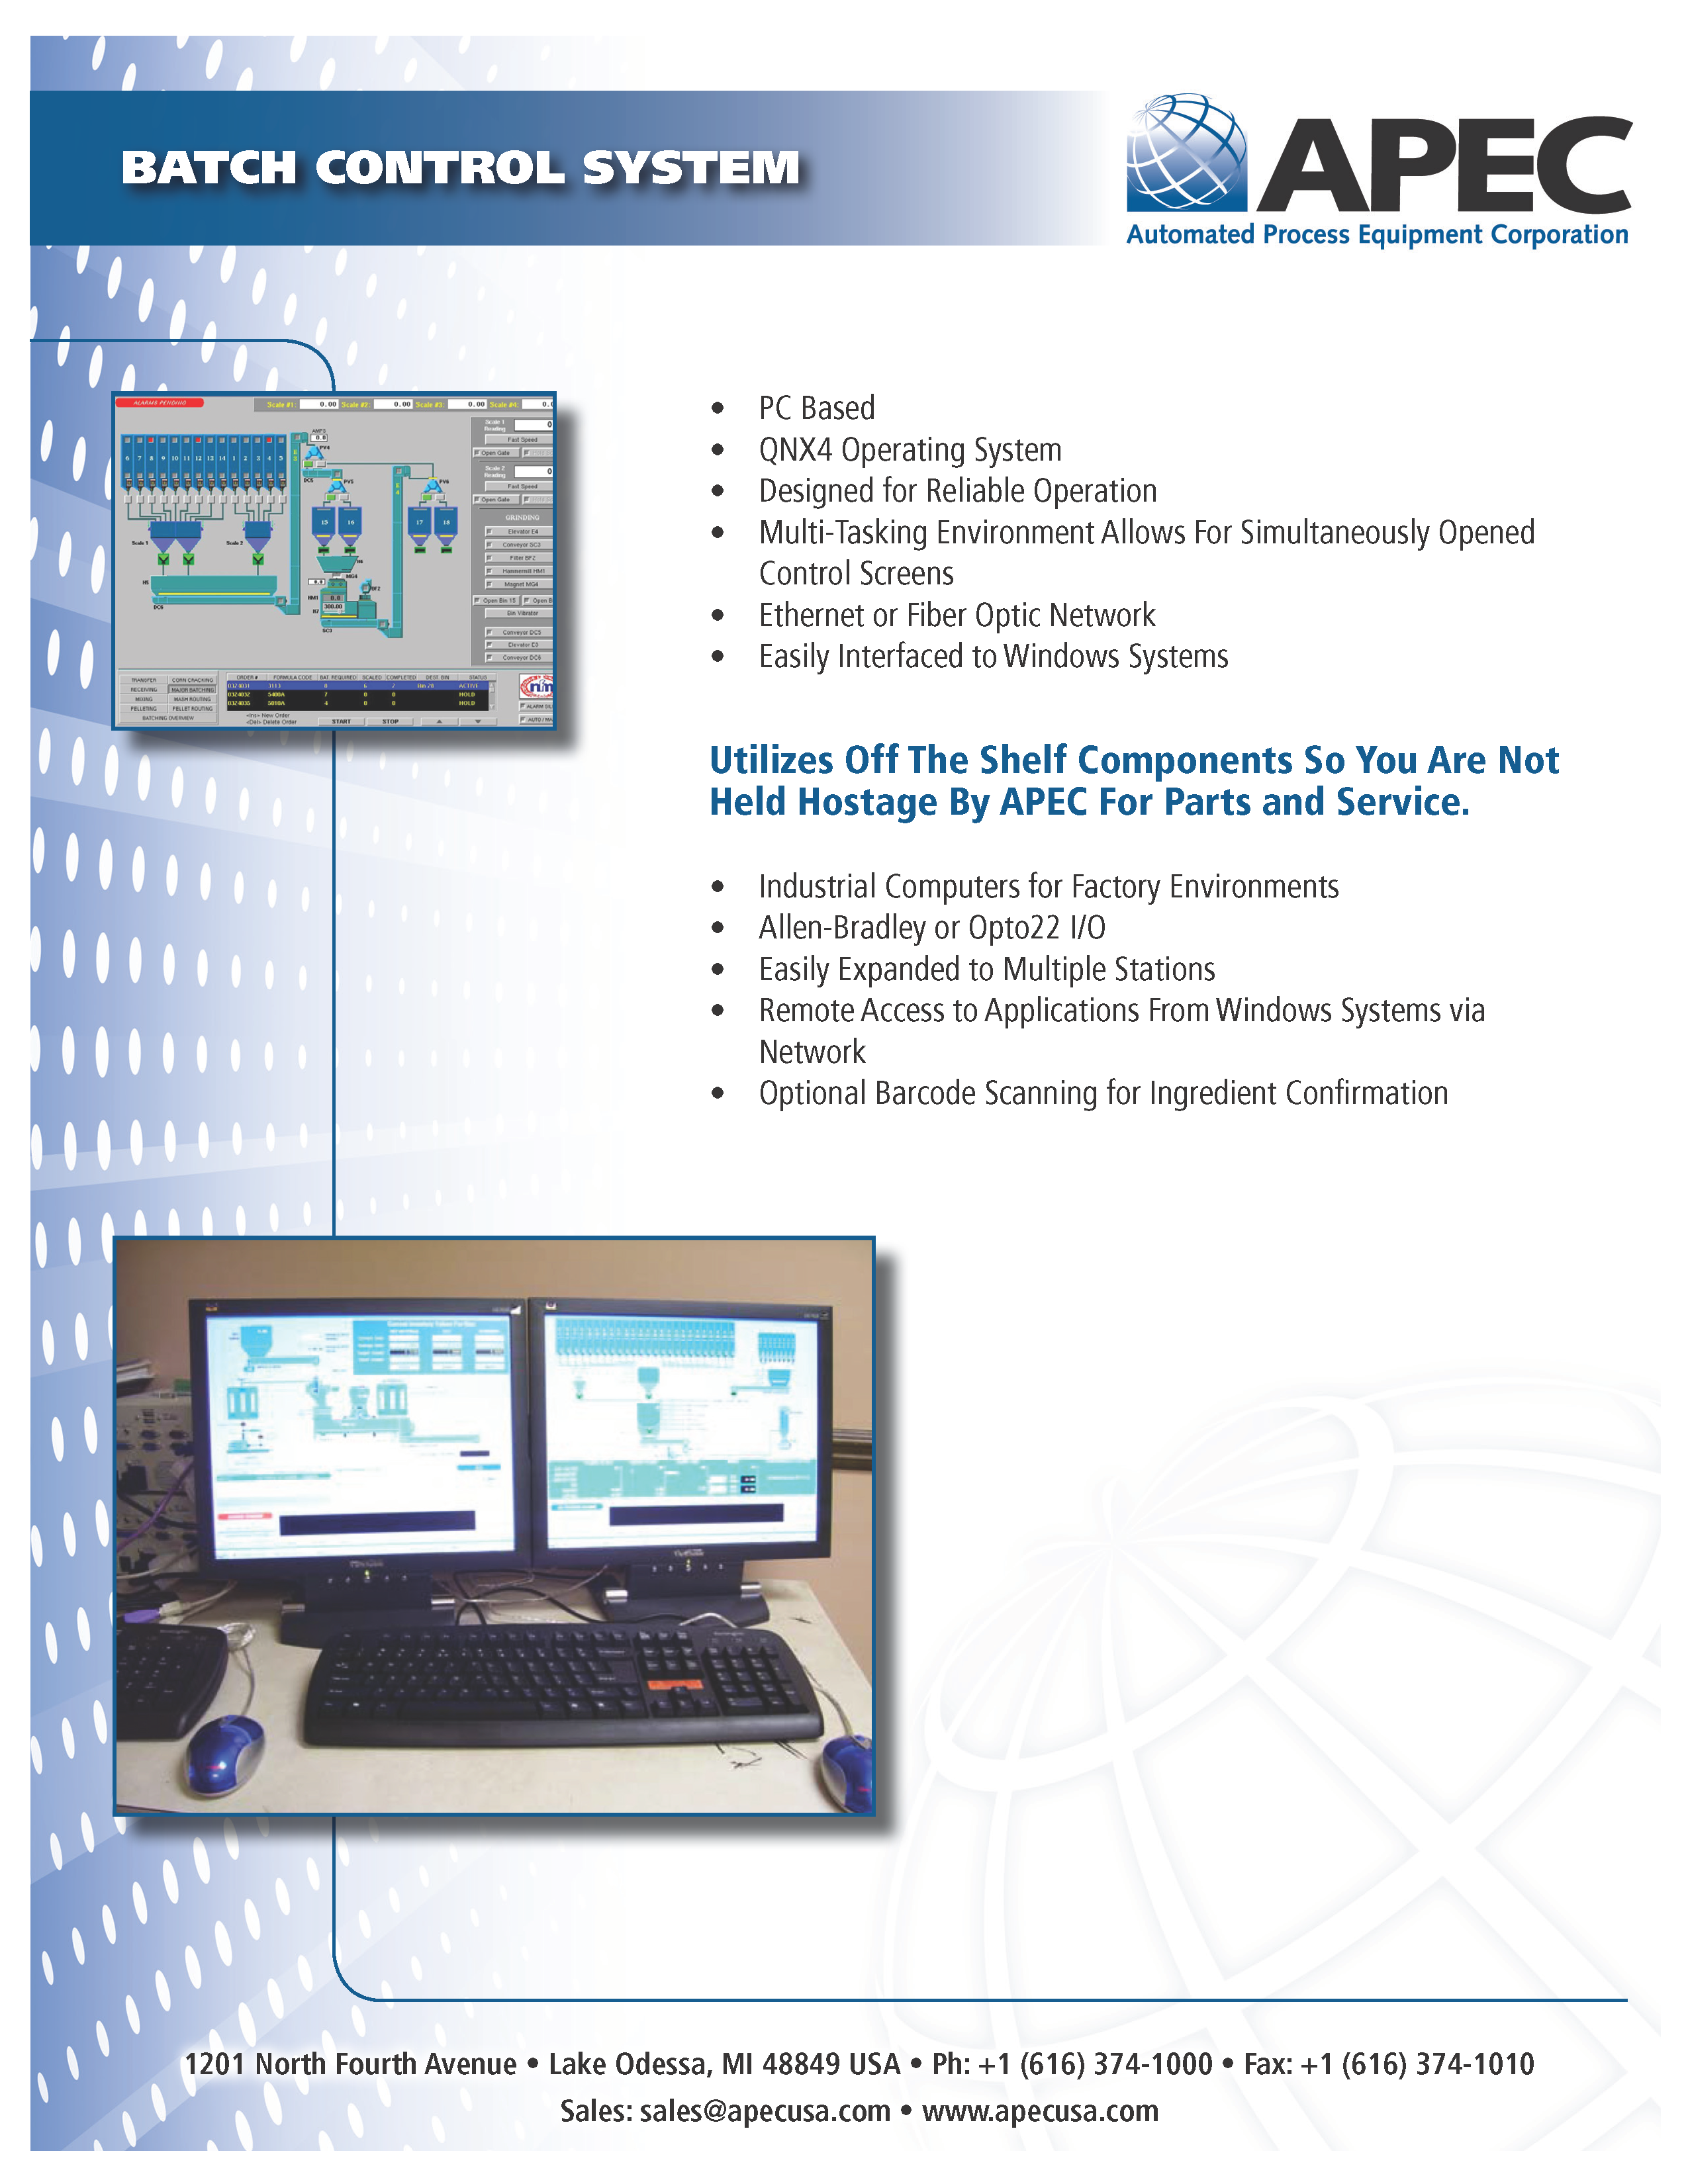 APEC Batch Control System Specs